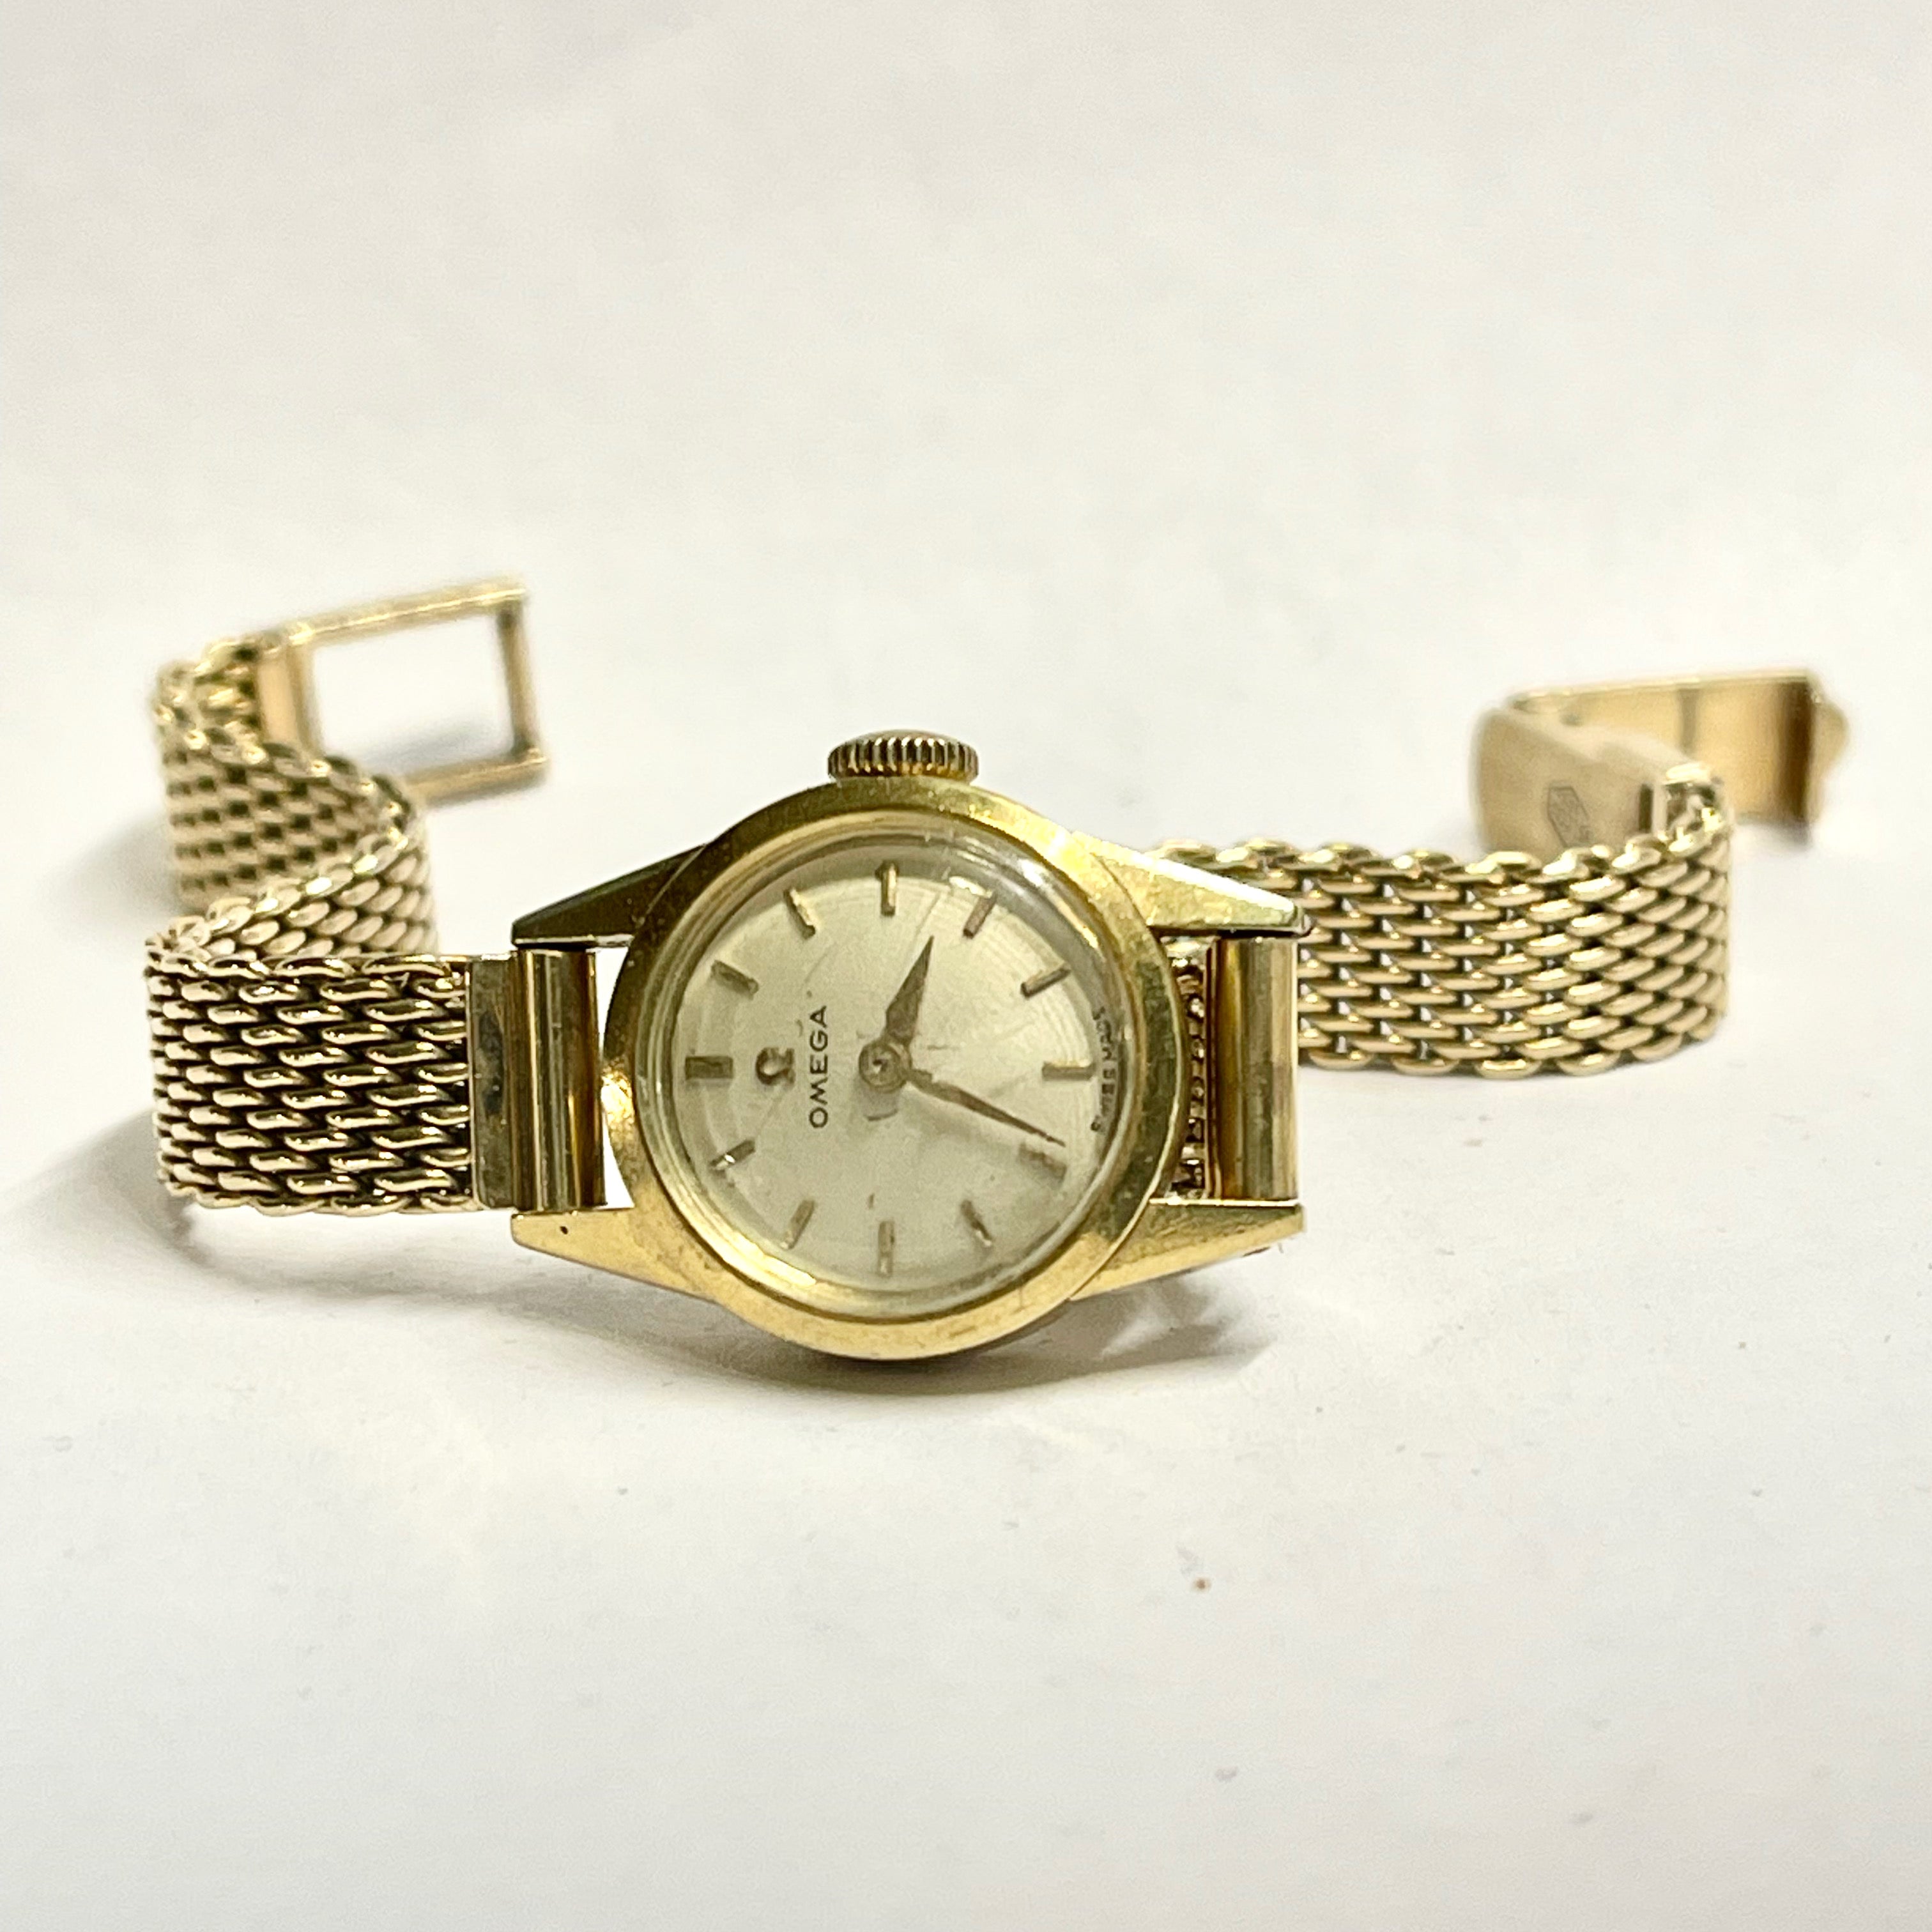 Bueche Girod 18k gold watch and Diamond Bezel - Ruby Lane